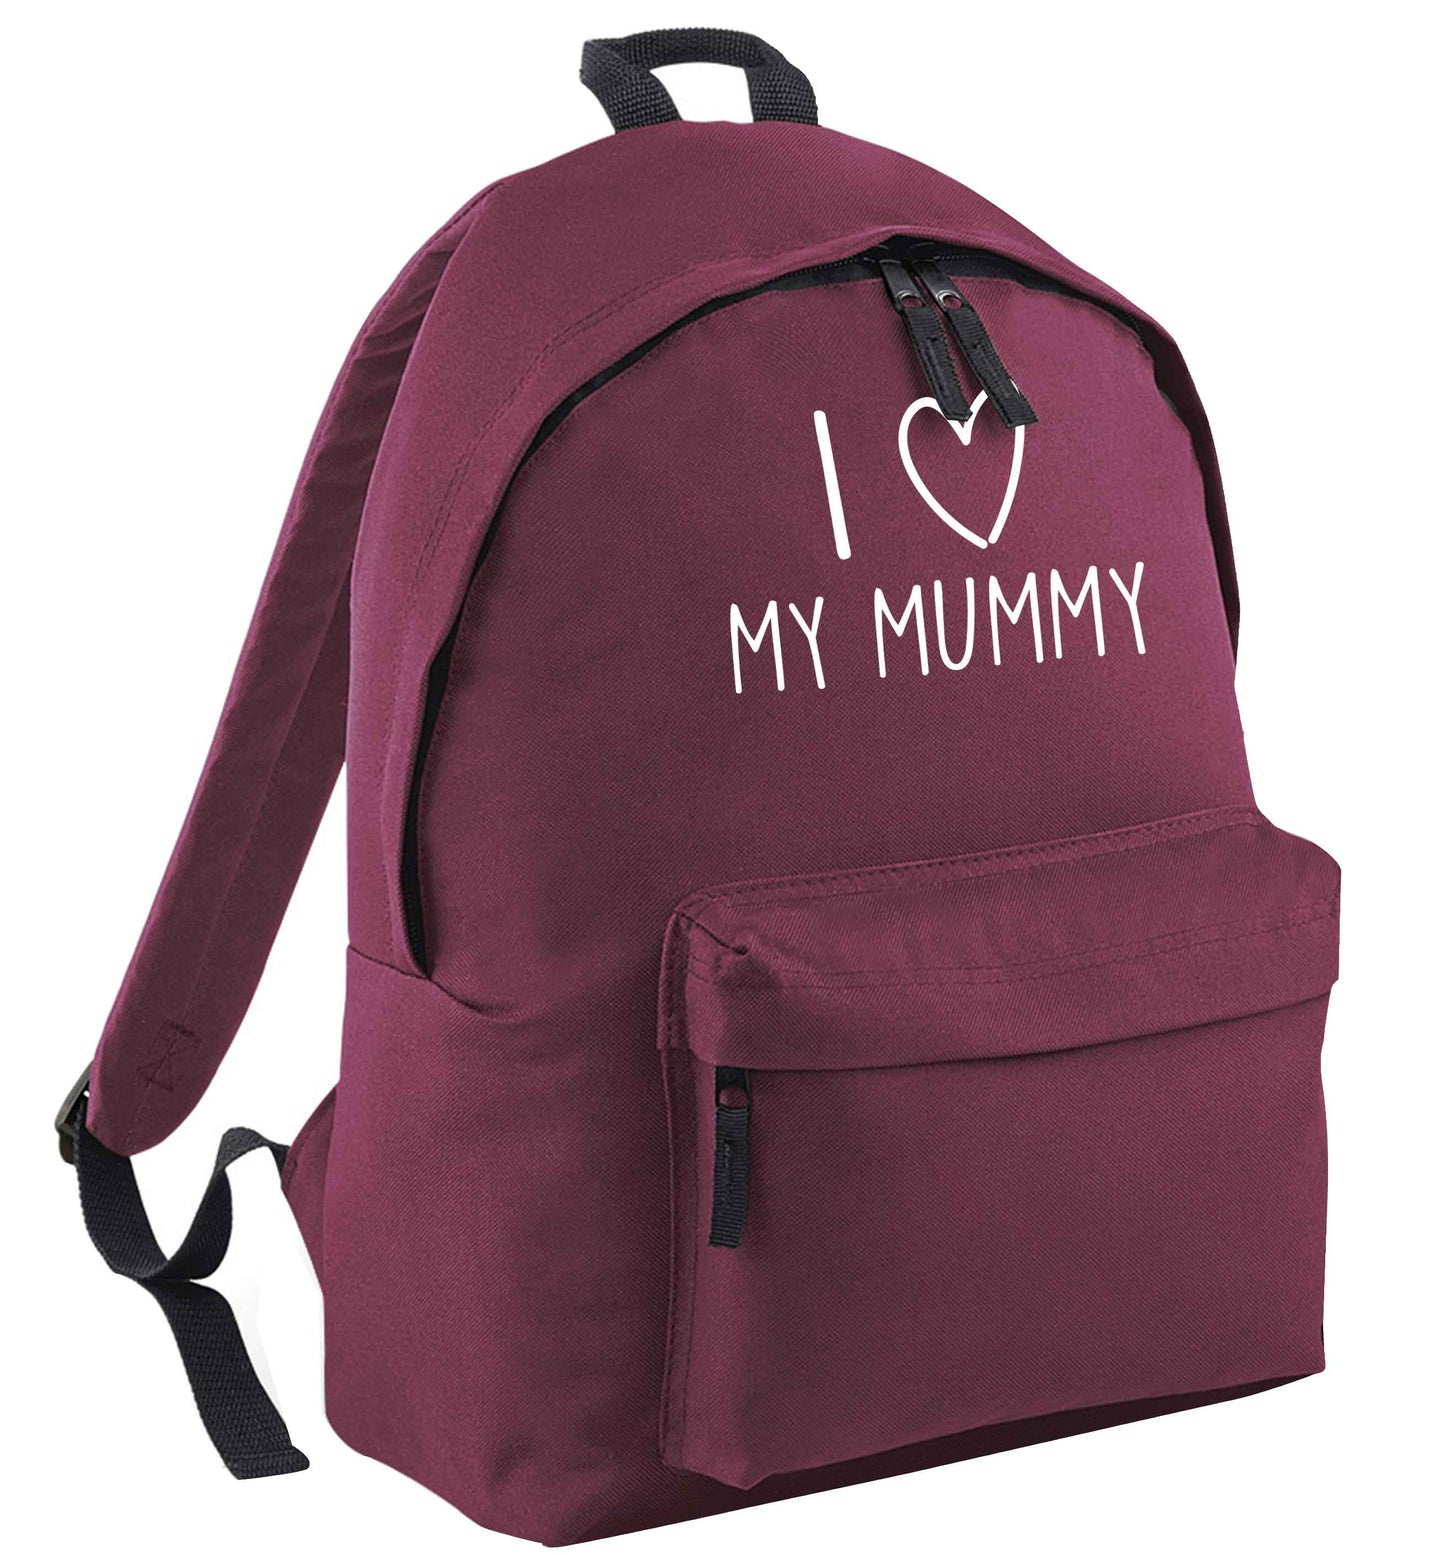 I love my mummy black childrens backpack